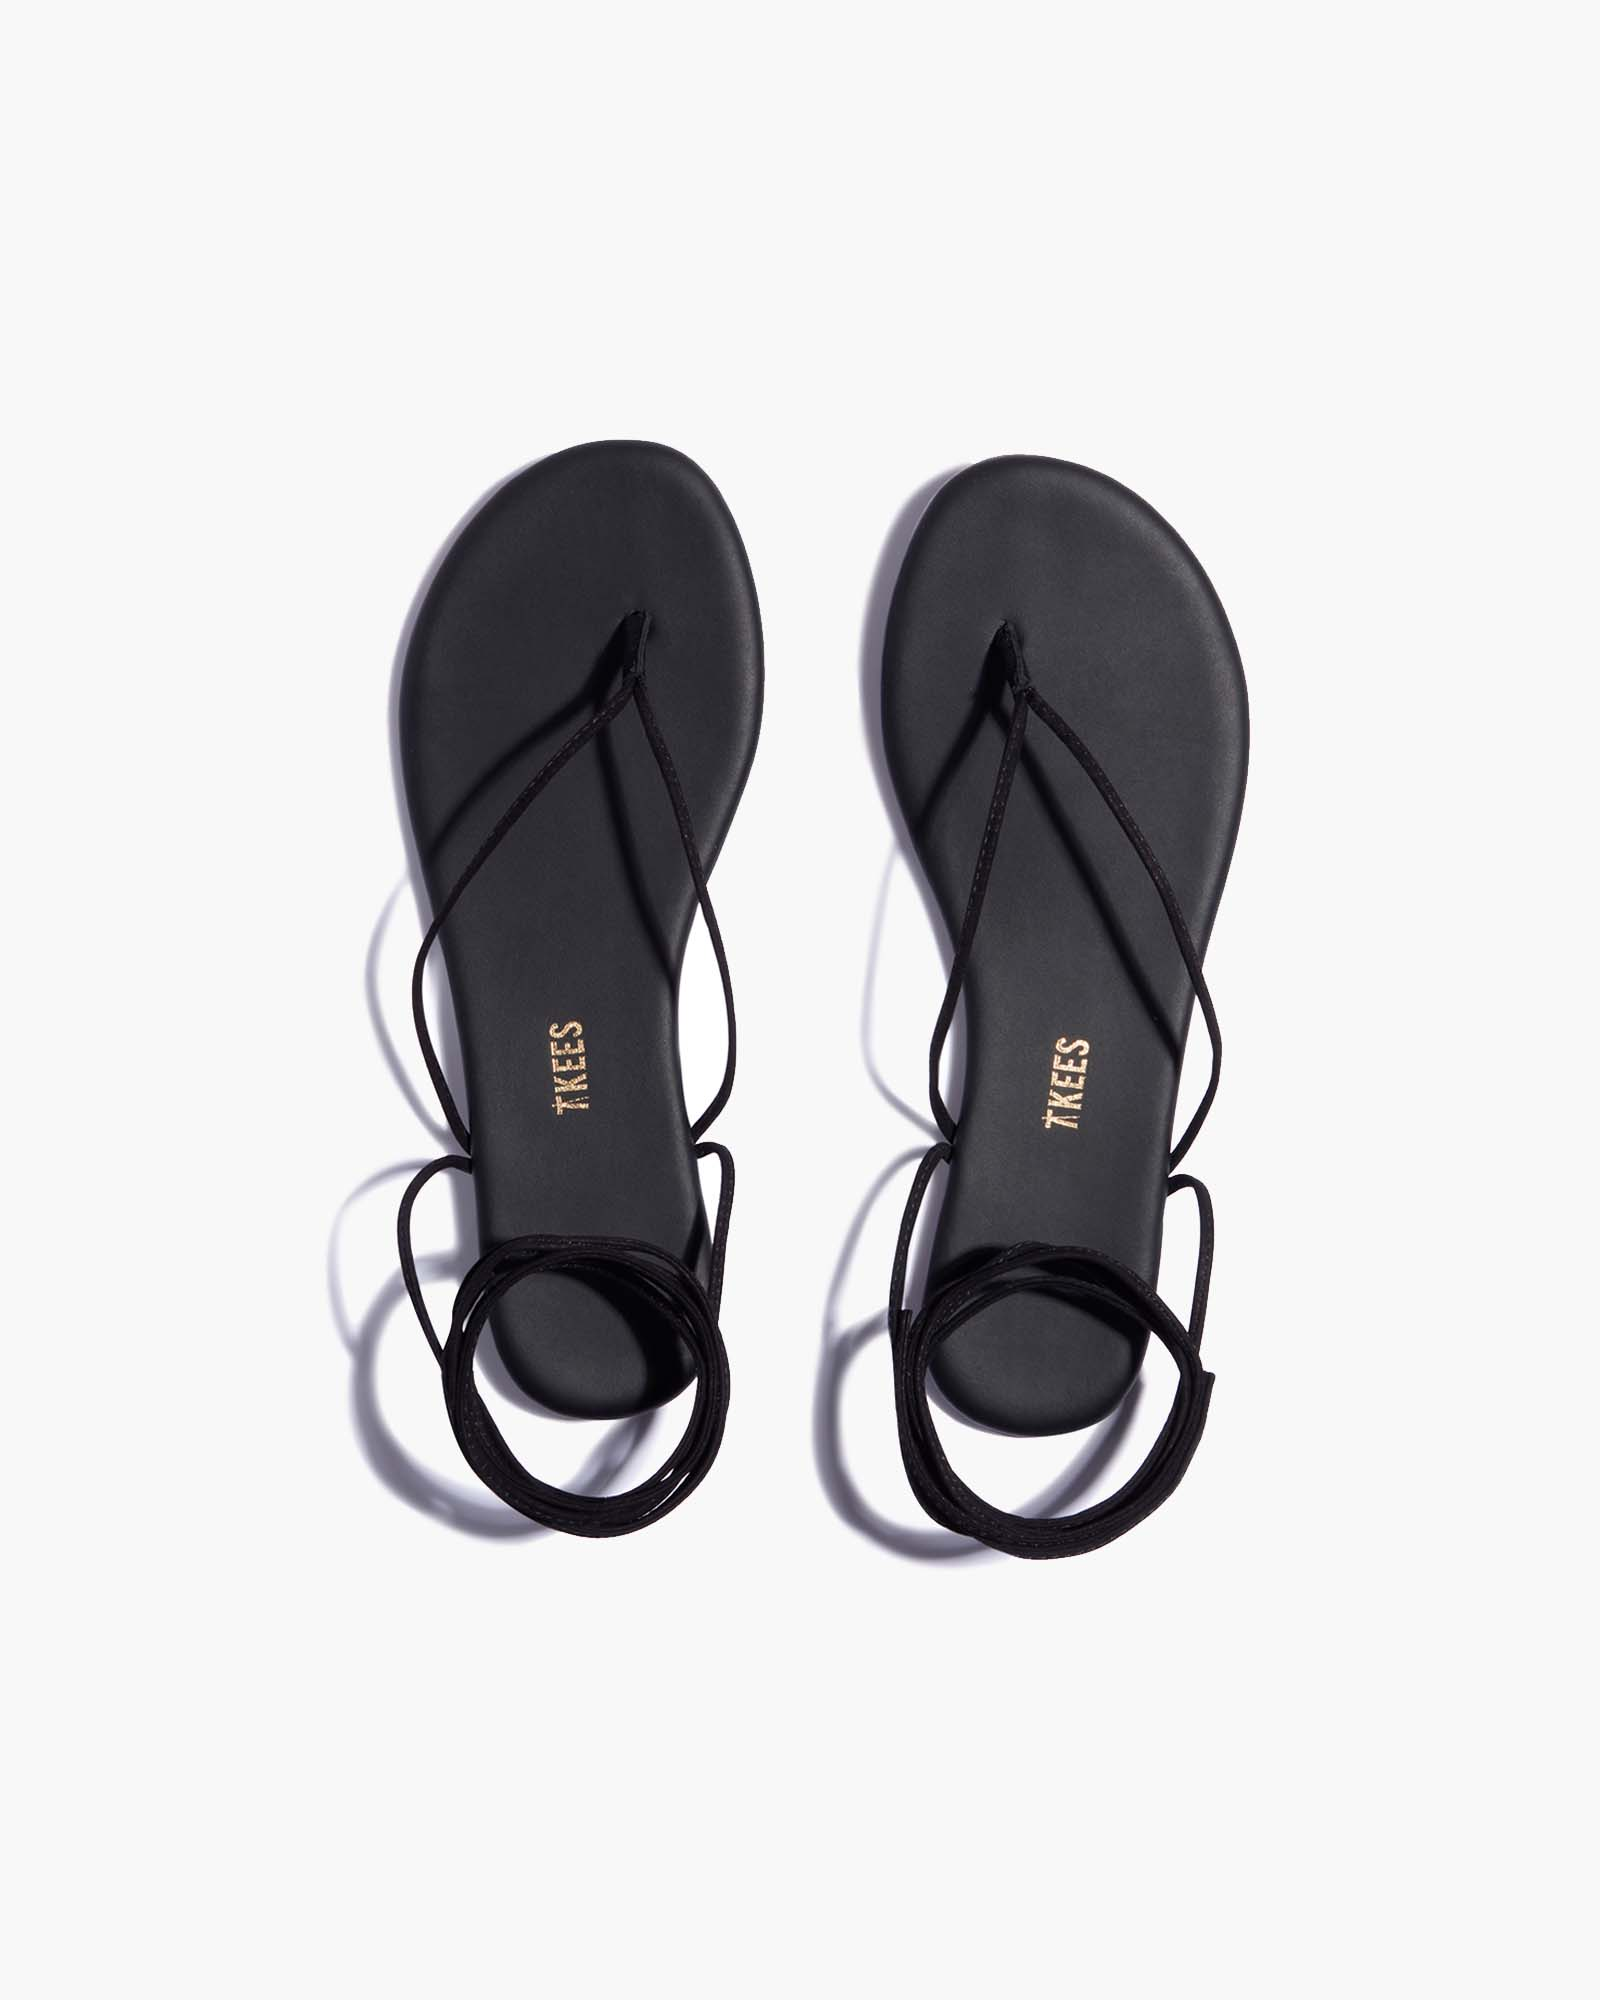 lilu sandal - product page